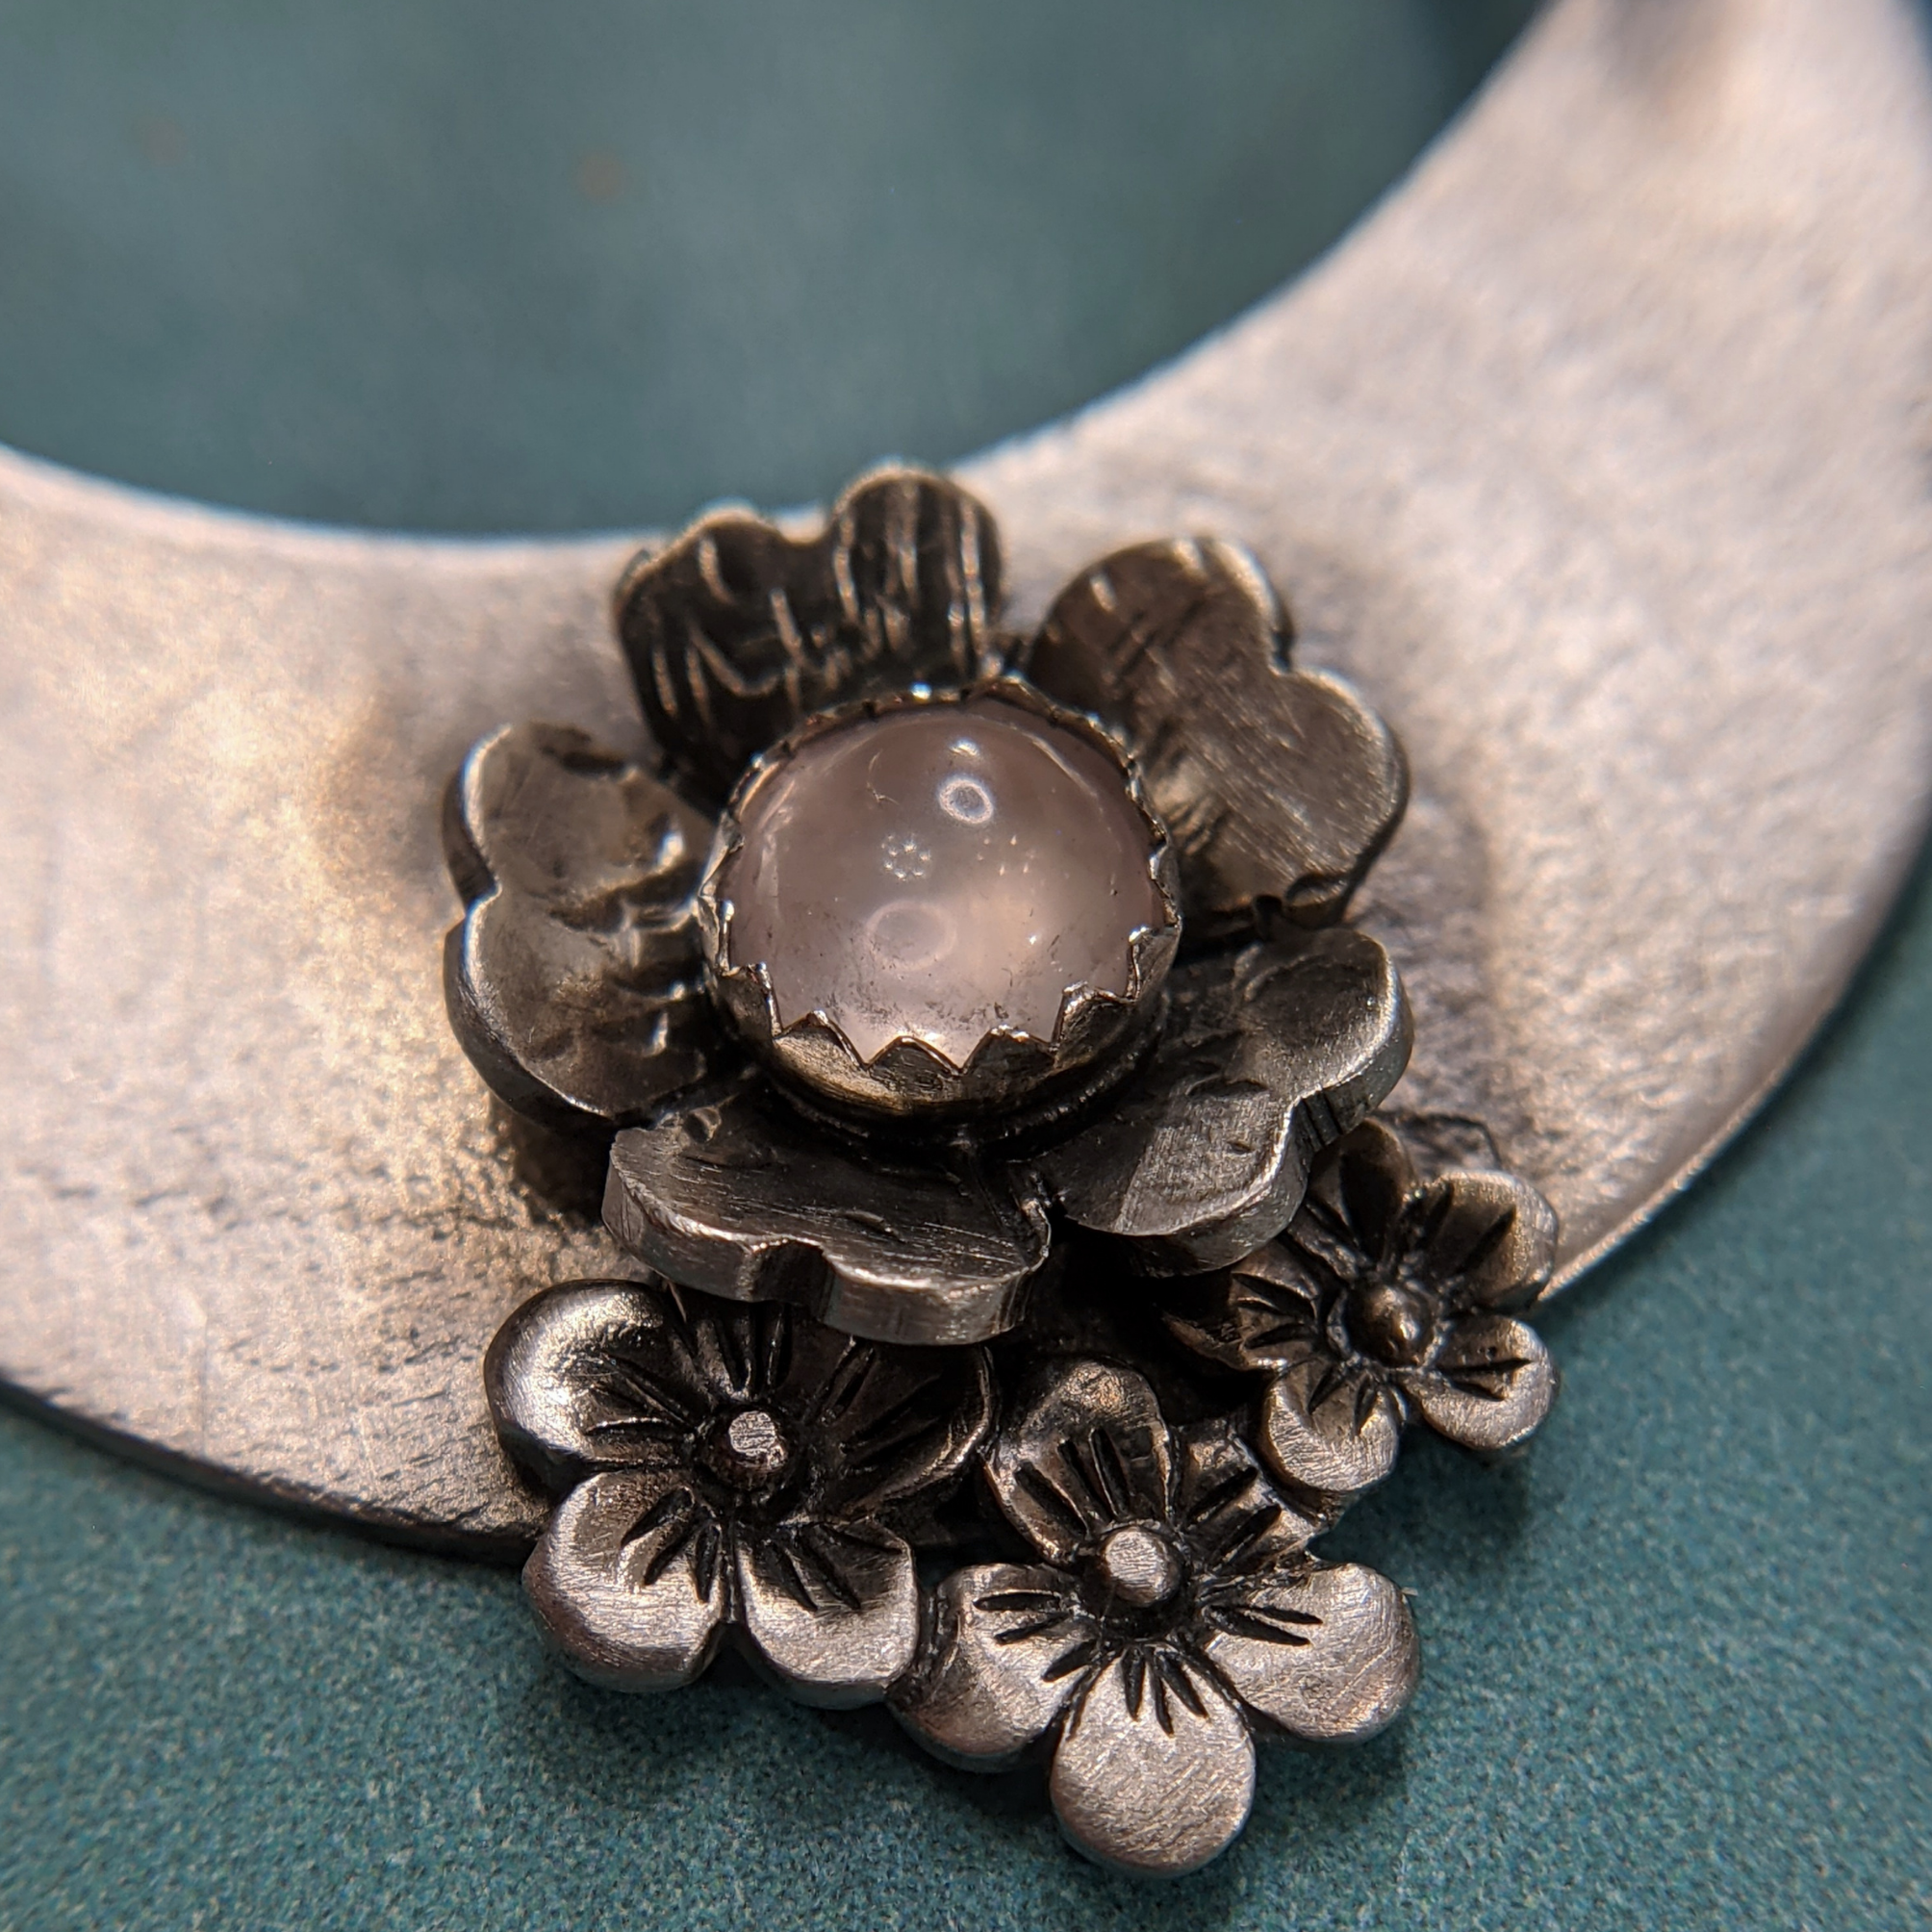 Crescent Moon Flower Earrings with Rose Quartz